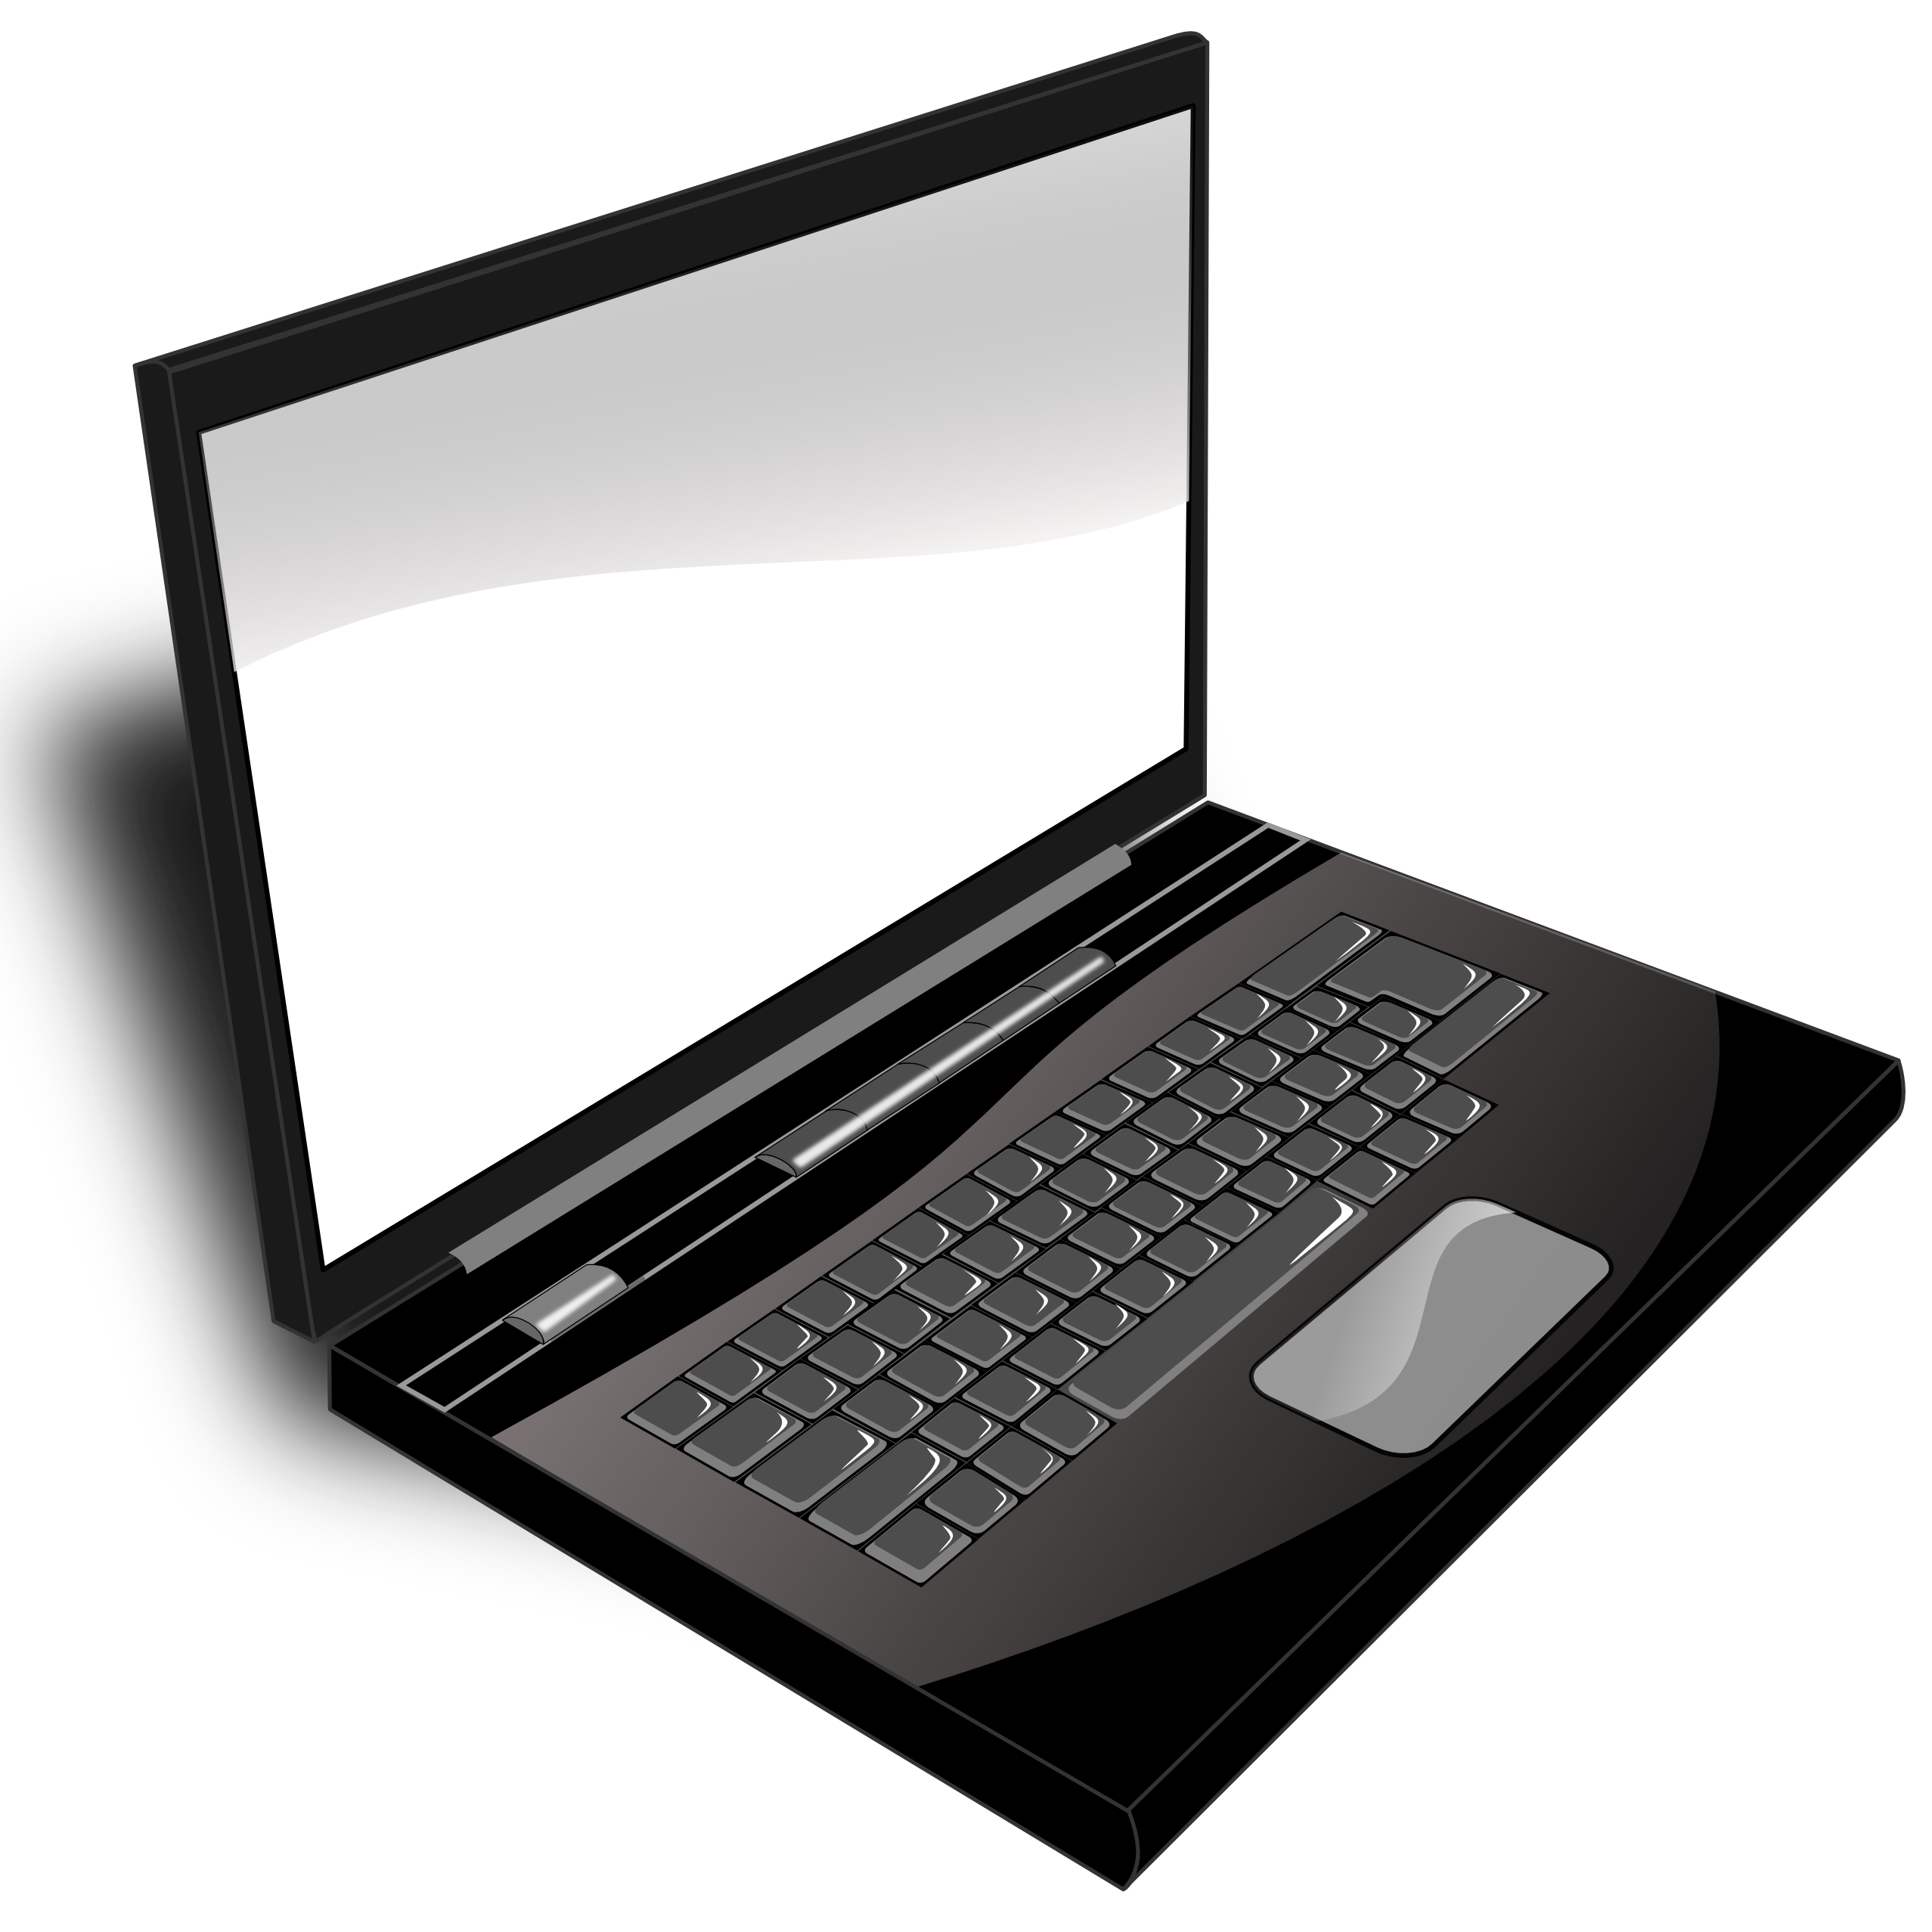 Laptop clip art black. Technology clipart computer technology